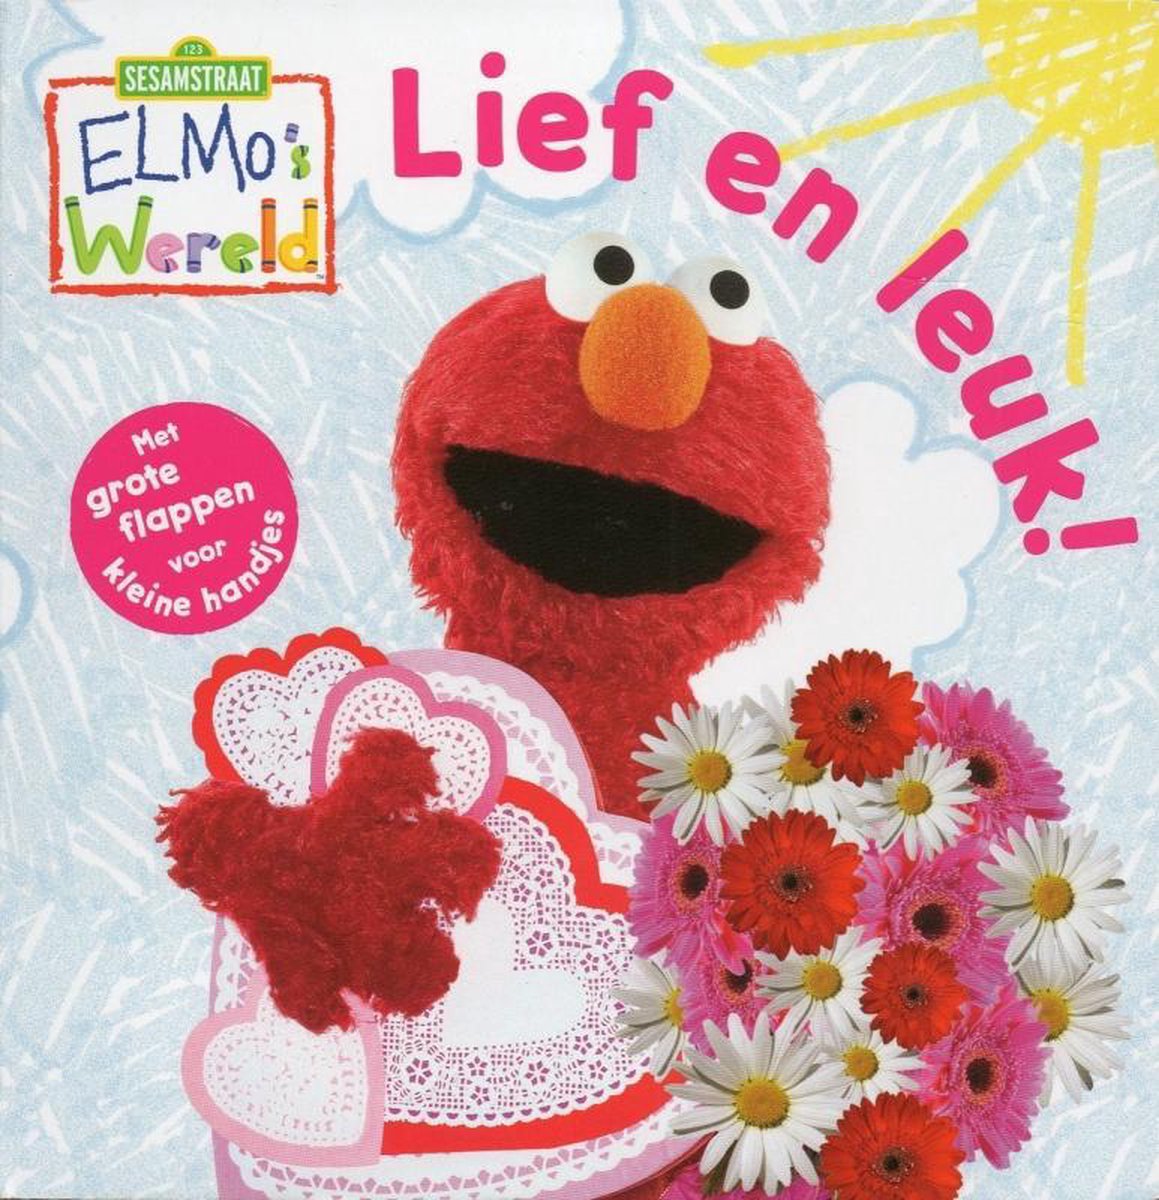 Elmo's wereld, Lief en leuk!